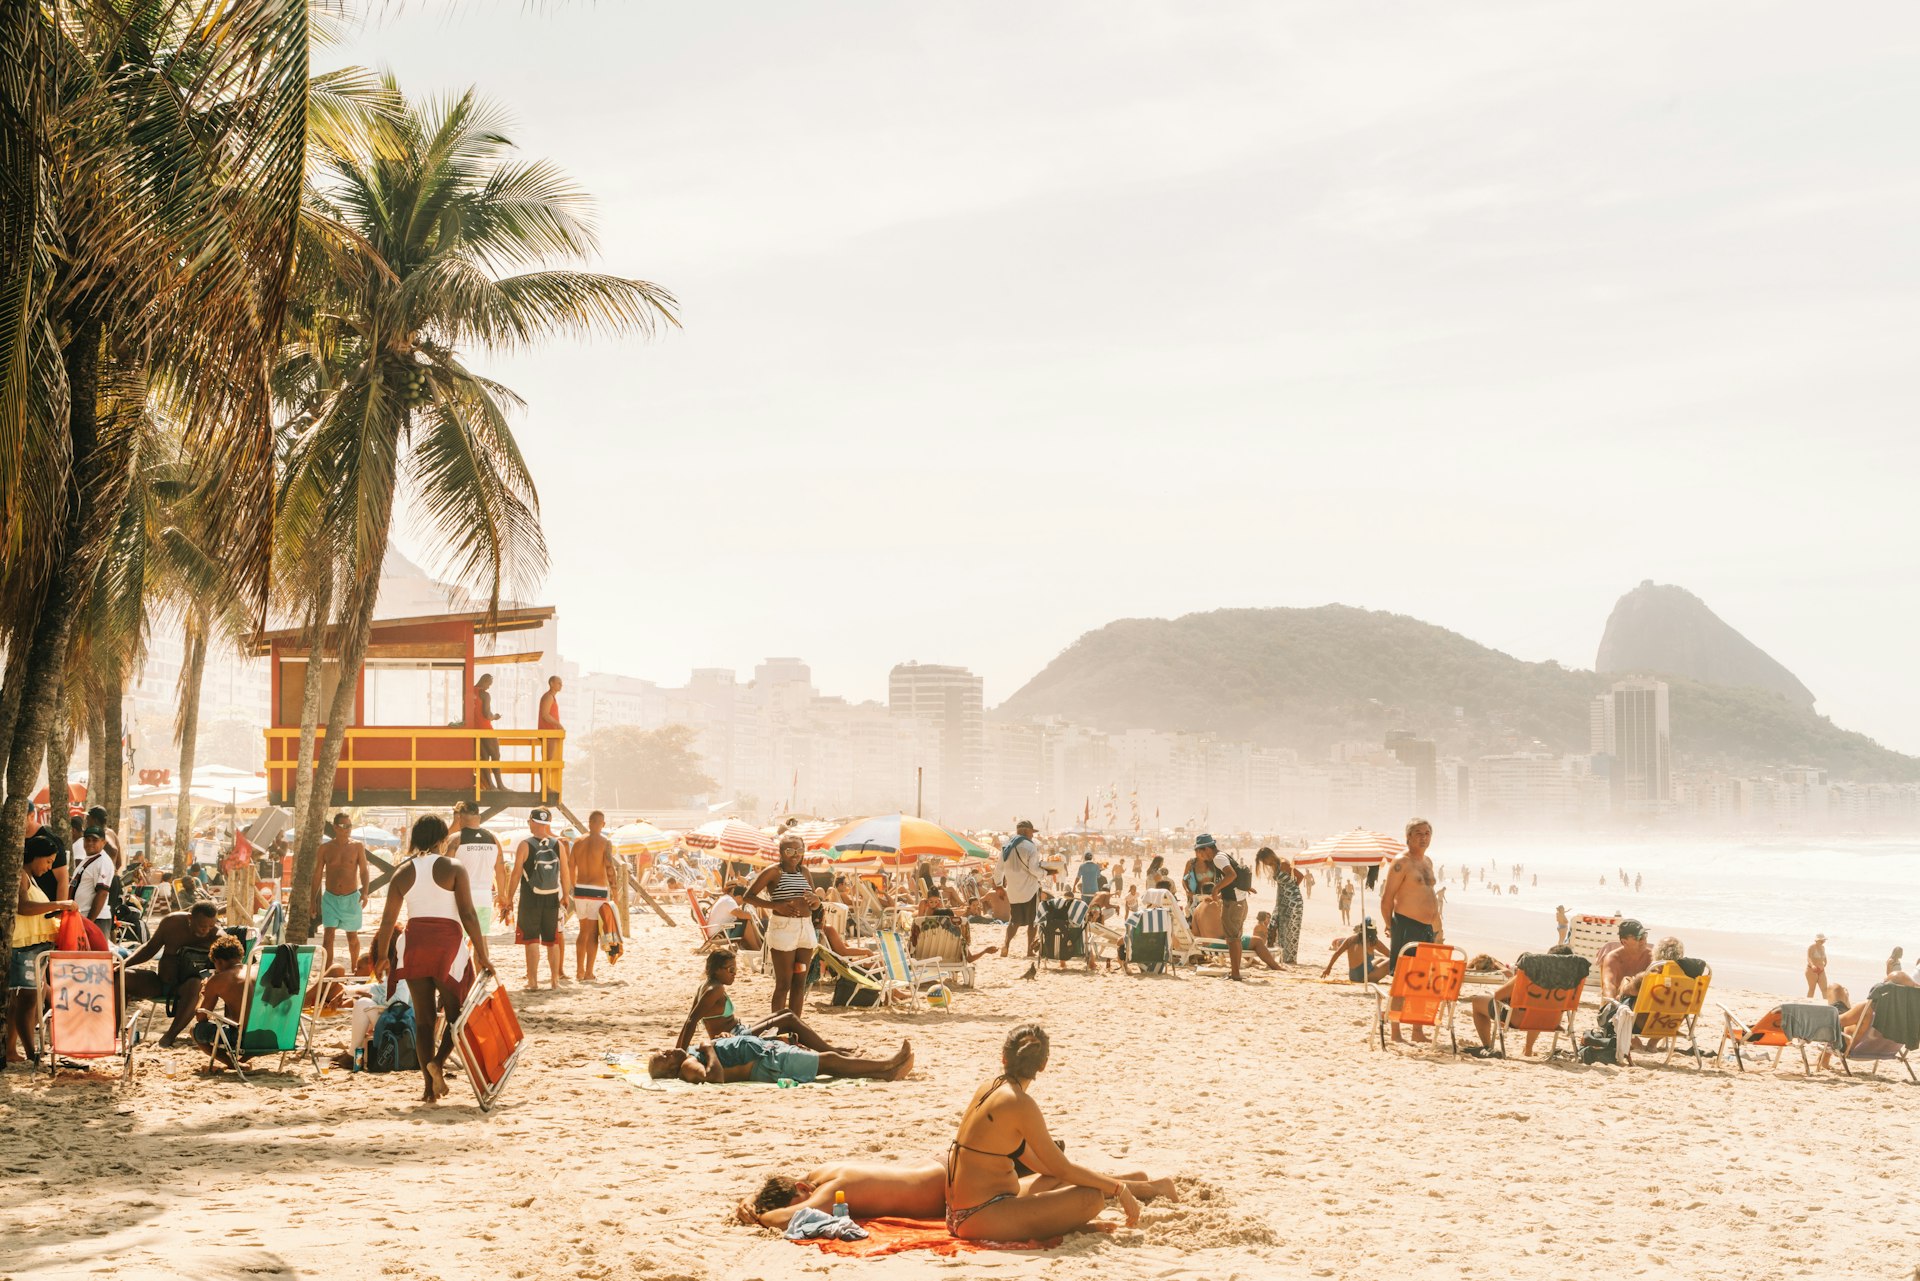 People relaxing and sunbathing at the famous Copacabana beach in Rio de Janeiro, Brazil